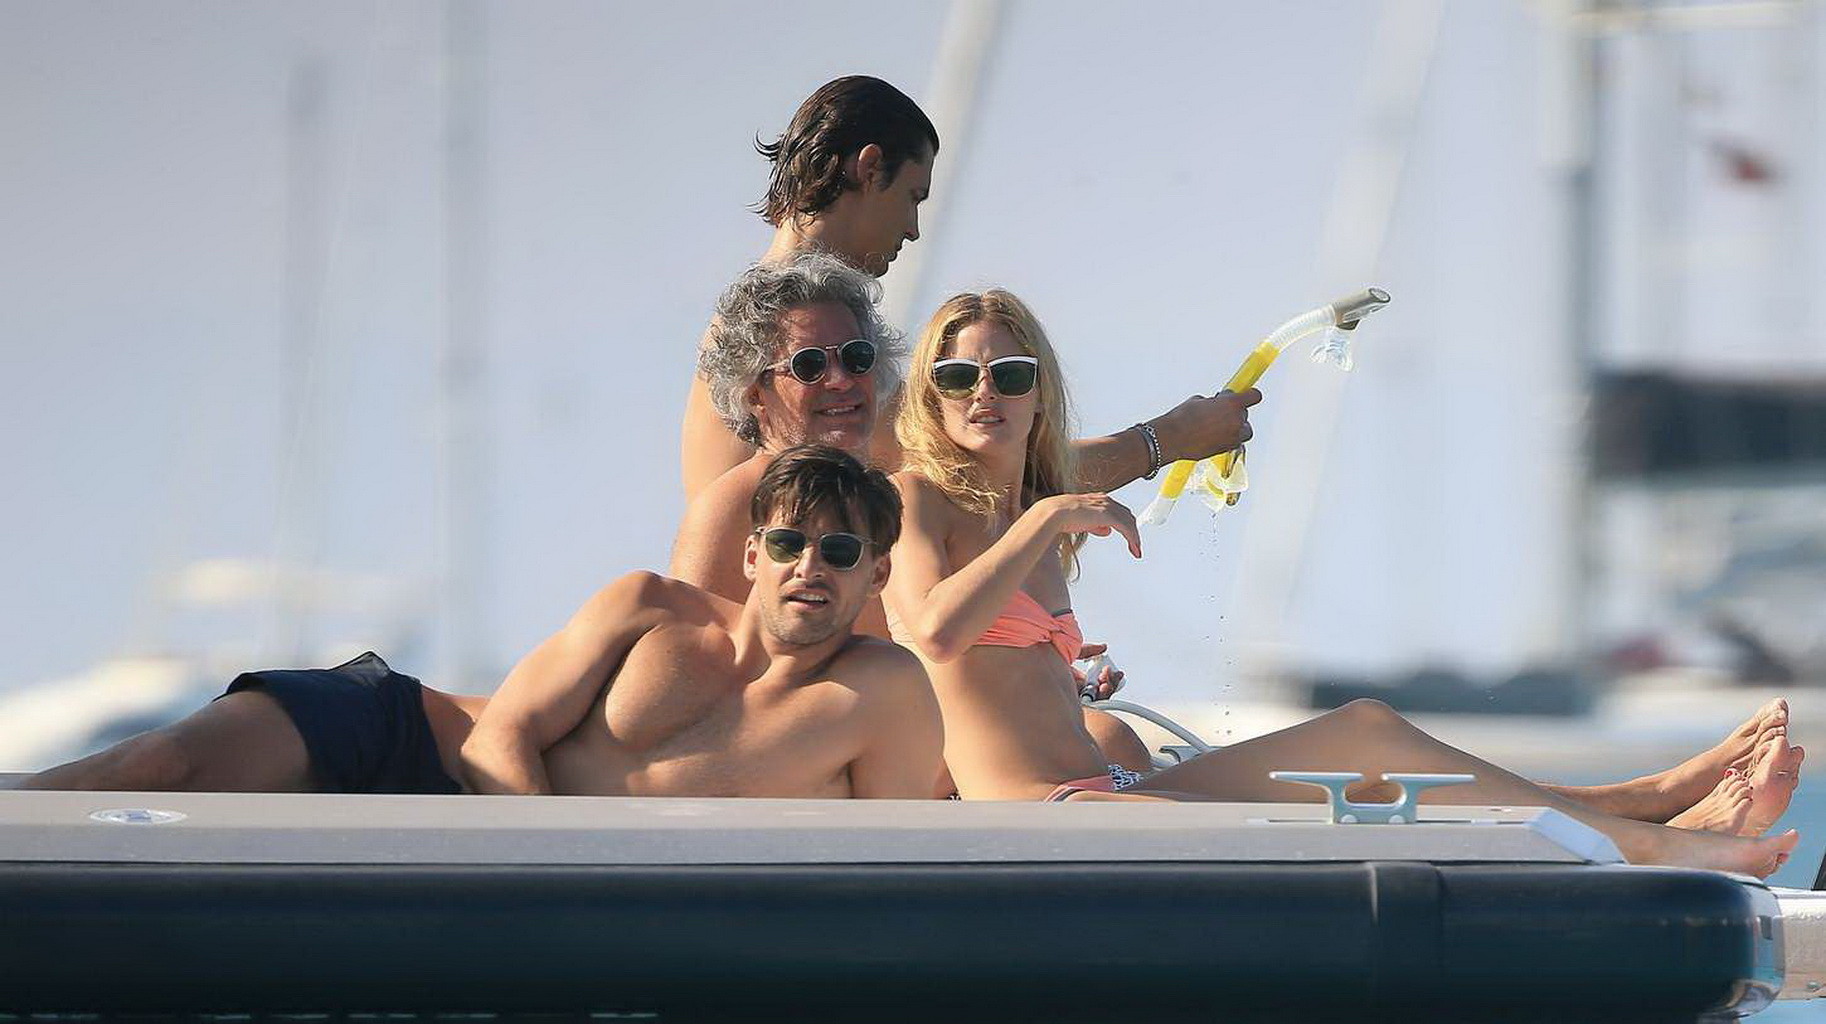 Olivia Palermo wearing tiny bikini and swimsuit on the boat #75156474